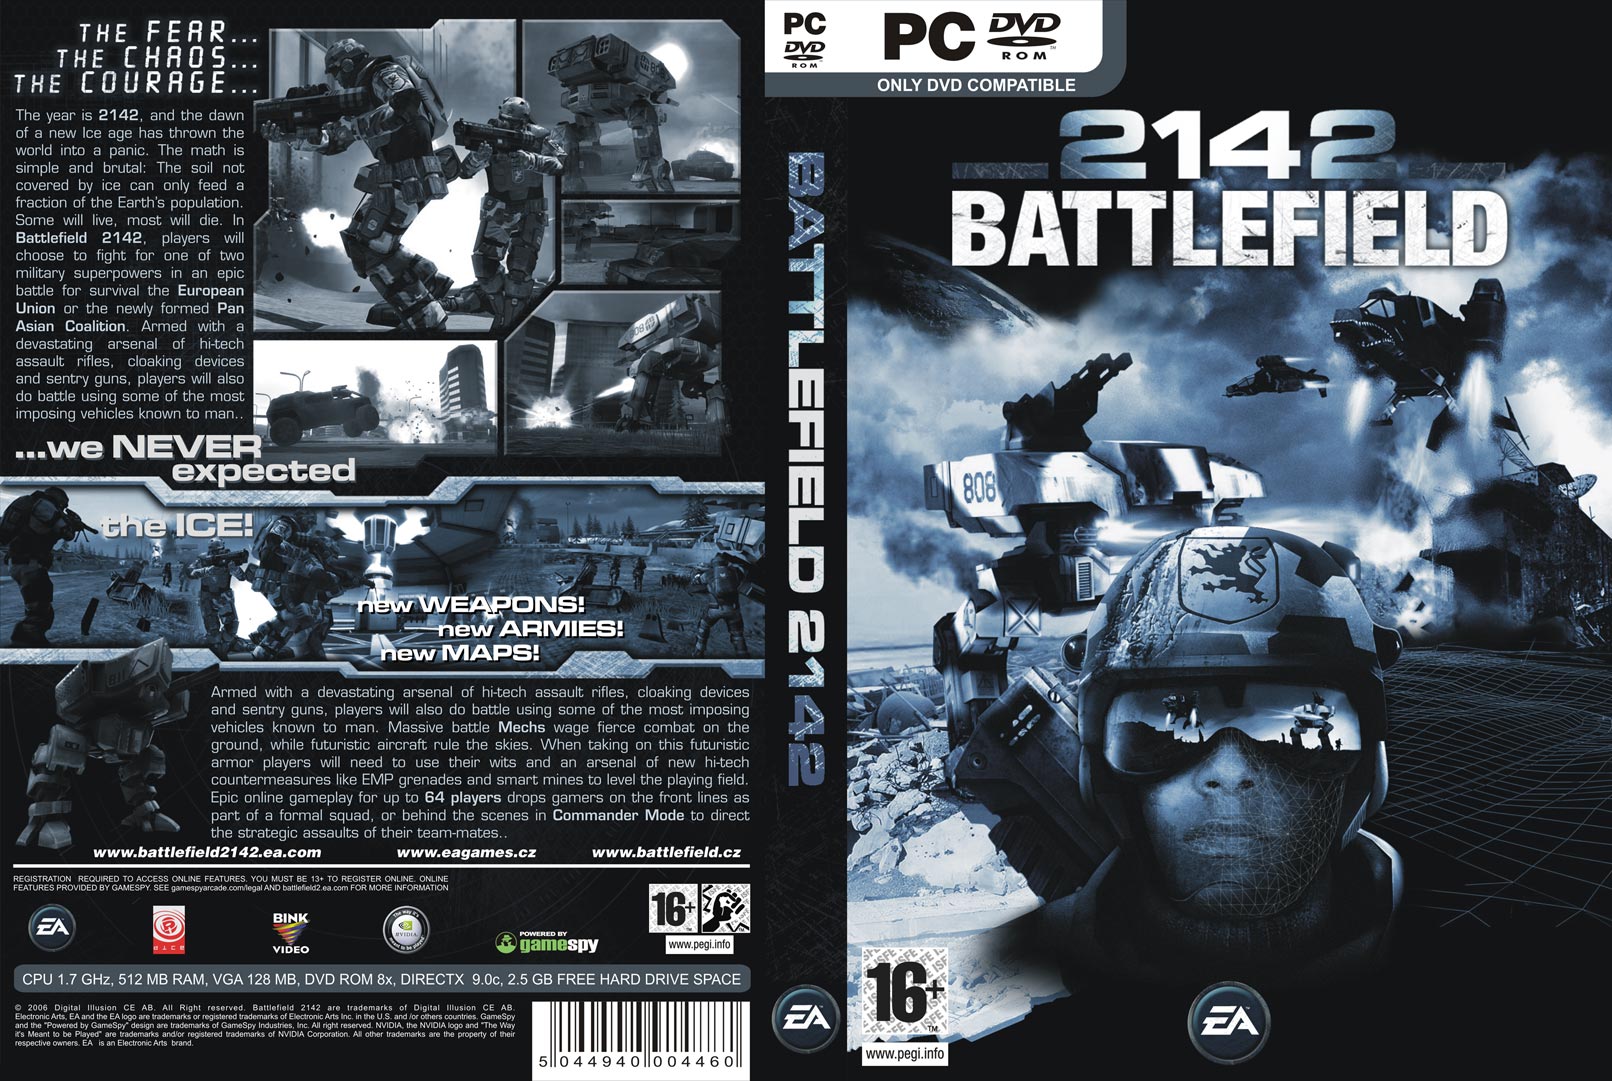 Battlefield 2142 - DVD obal 2